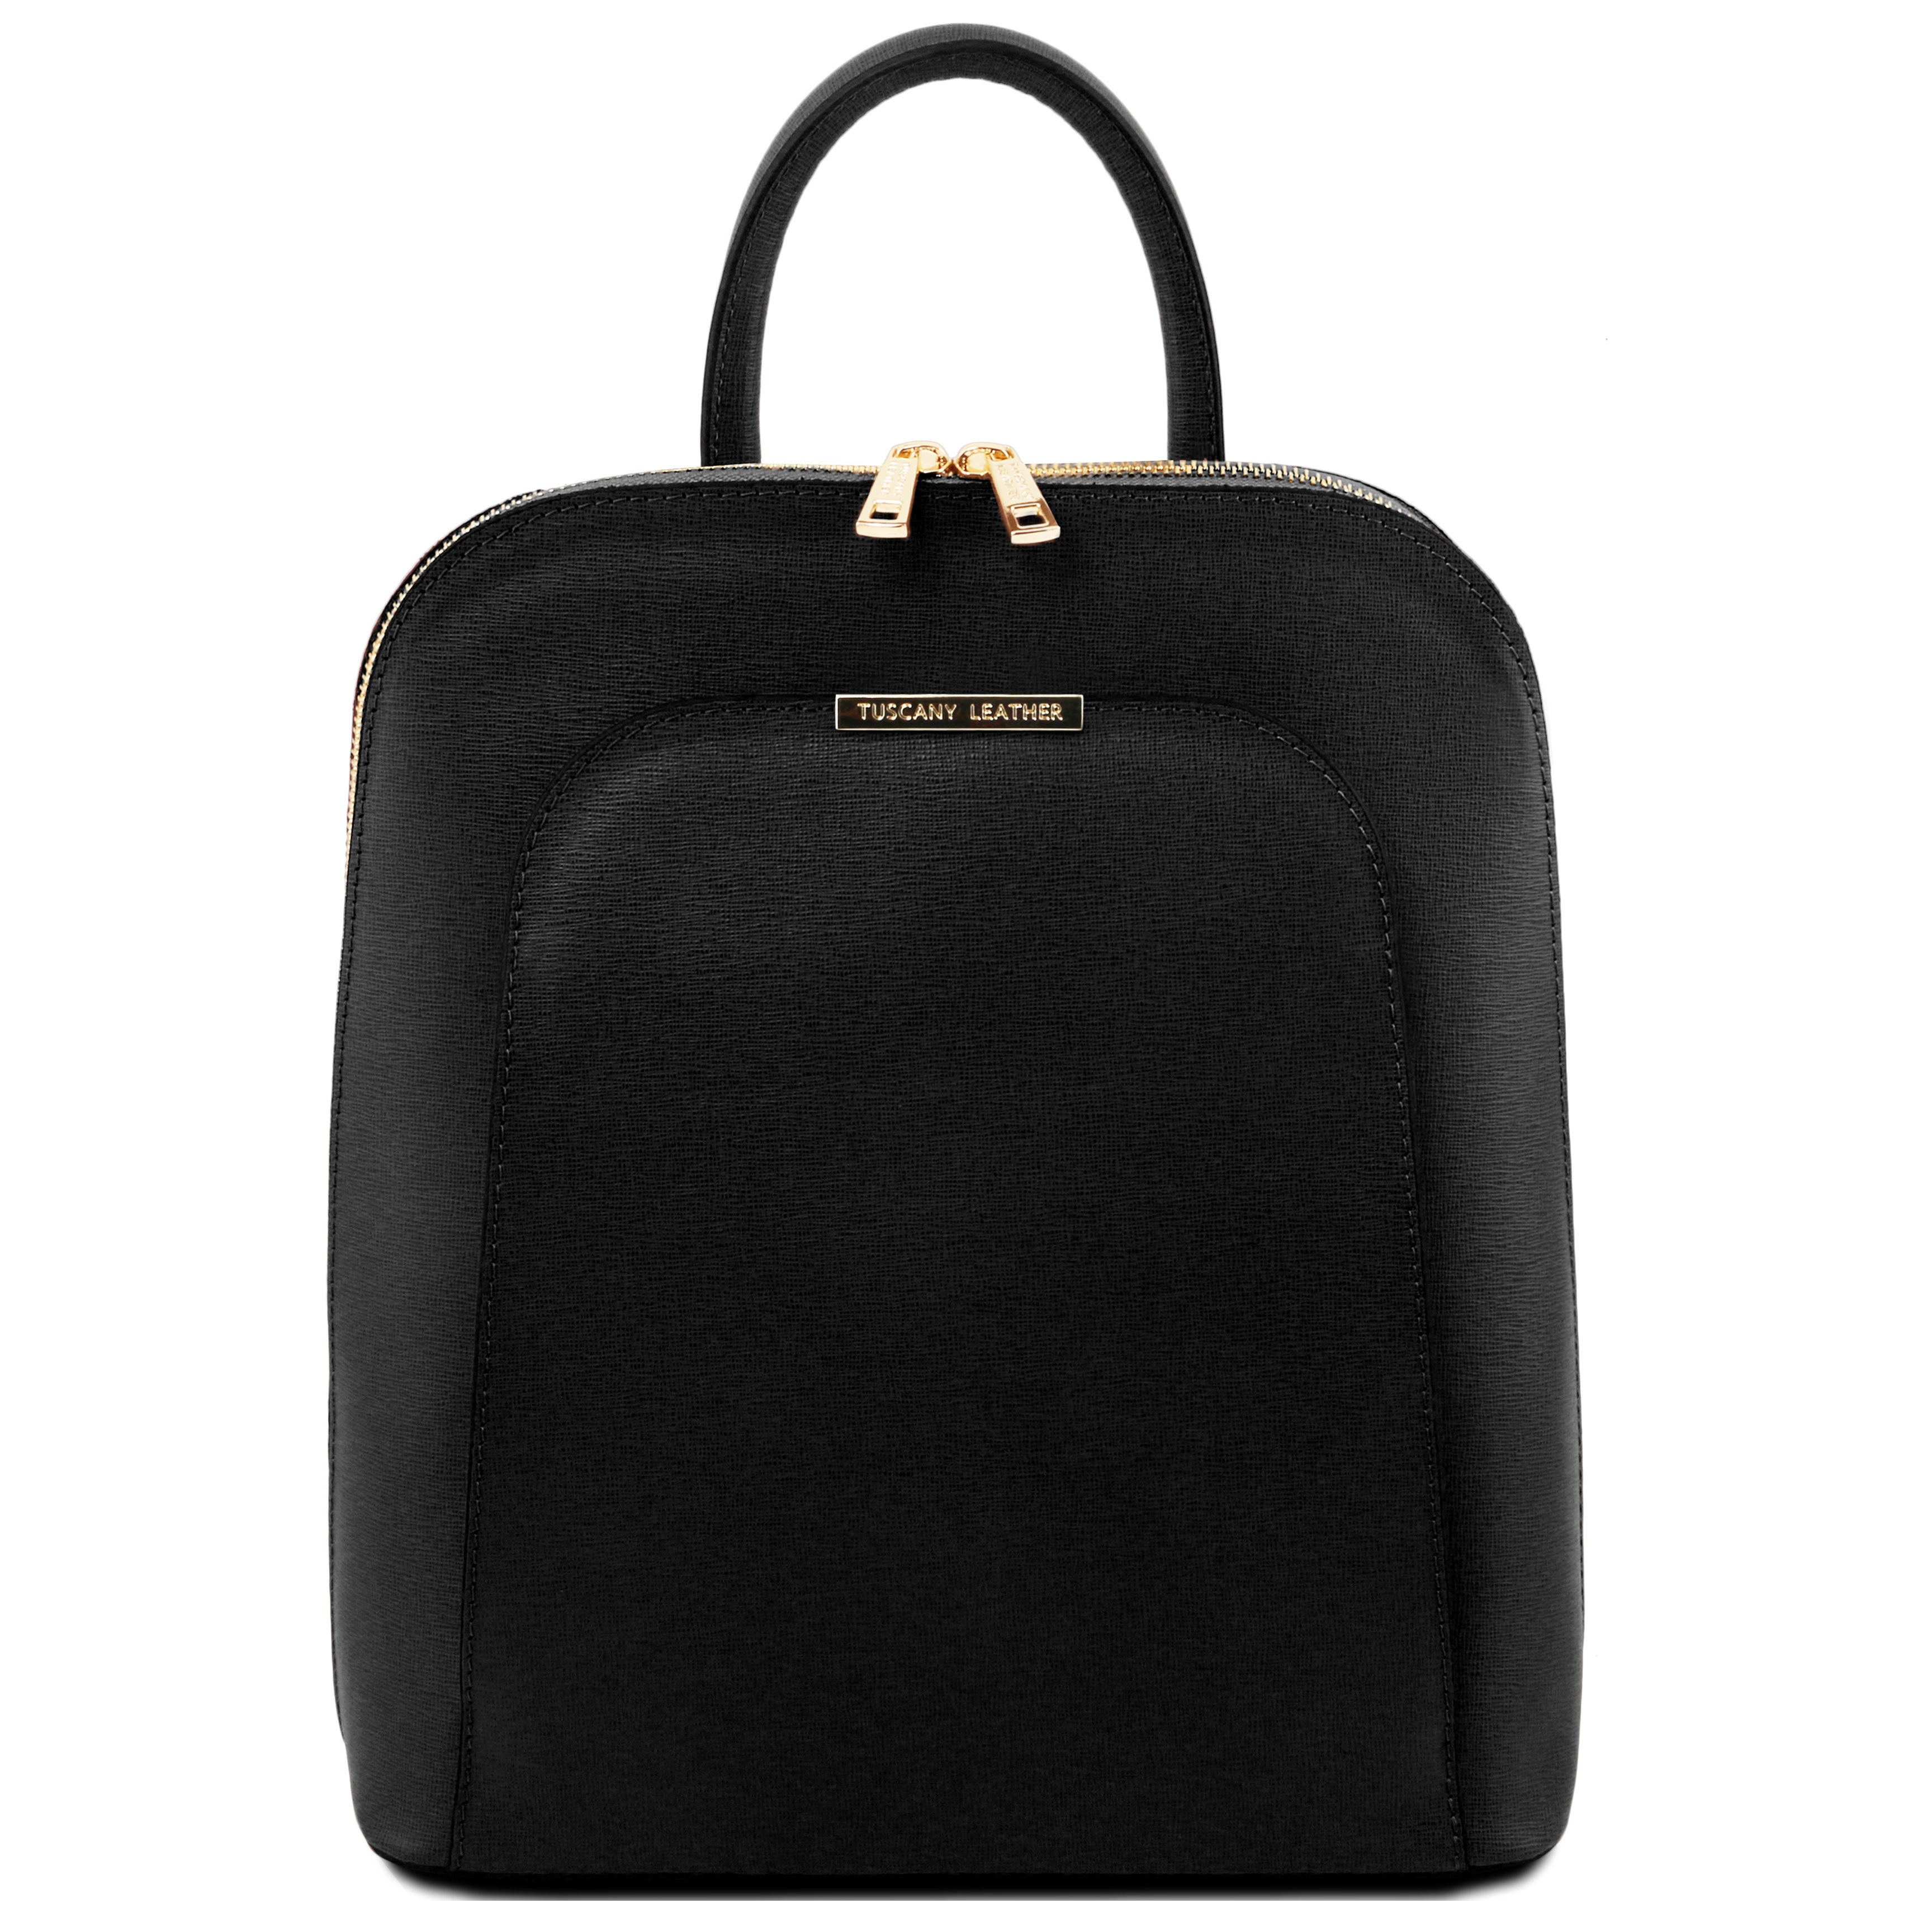 Tuscany Leather TL Bag saffiano leren dames rugtas voorkant tas zwart